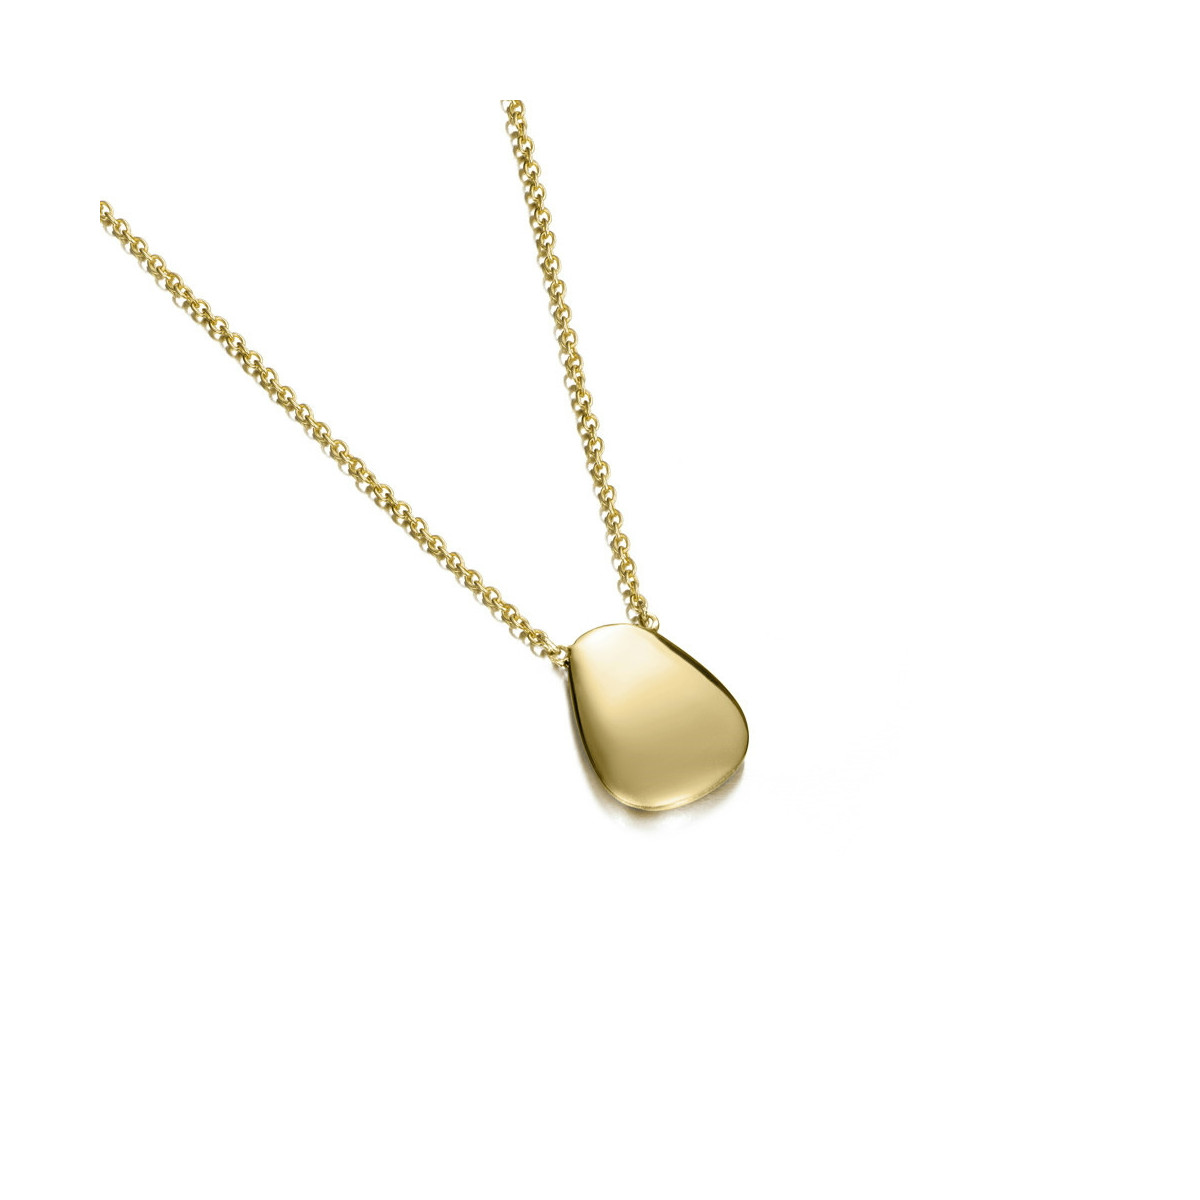 MERCURY Necklace in SILVER. 18k GOLD Vermeil